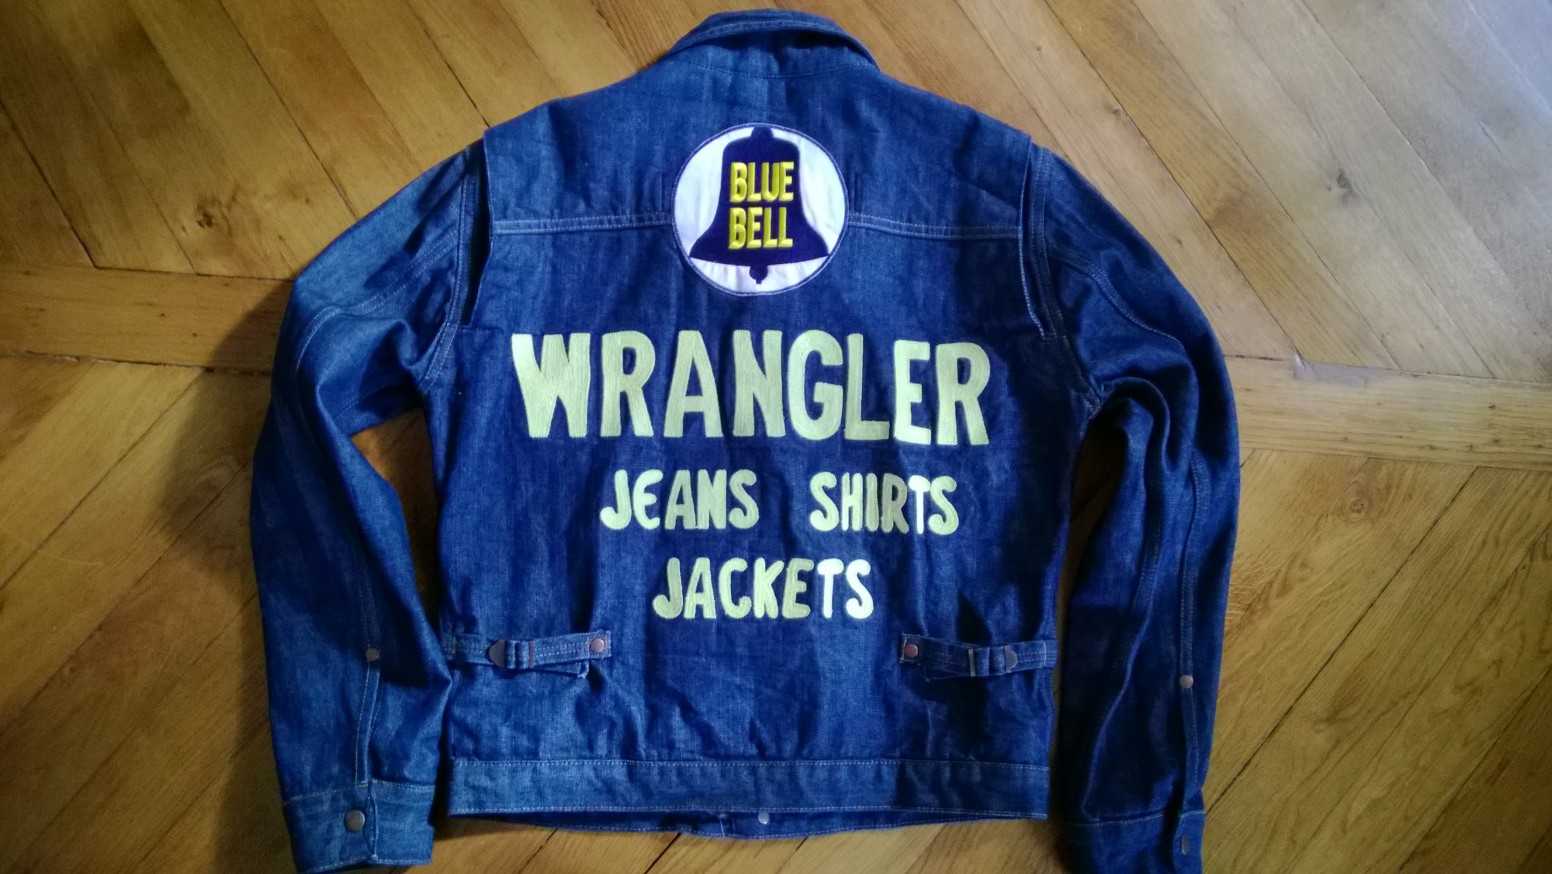 Wrangler Champion Jacket and Jeans | denim etc.